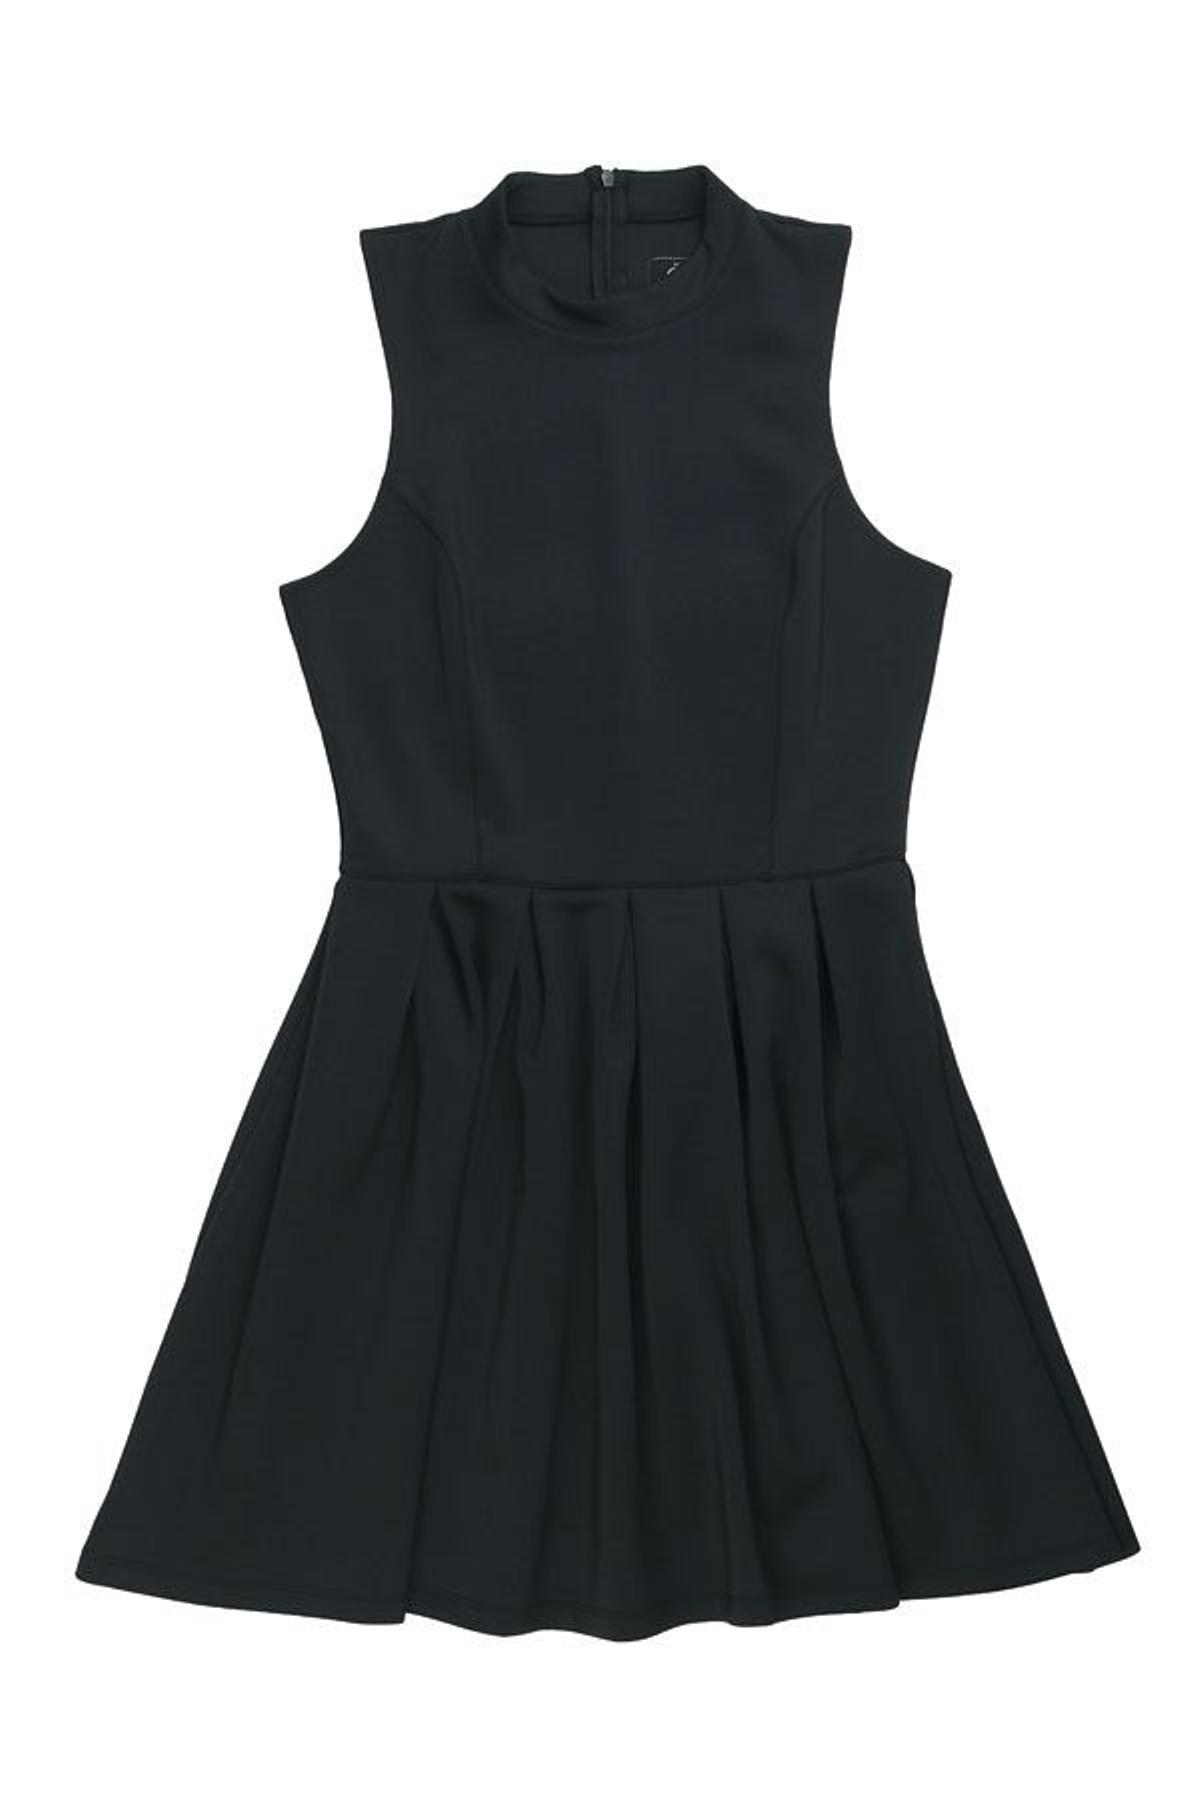 Little black dress: Superdry